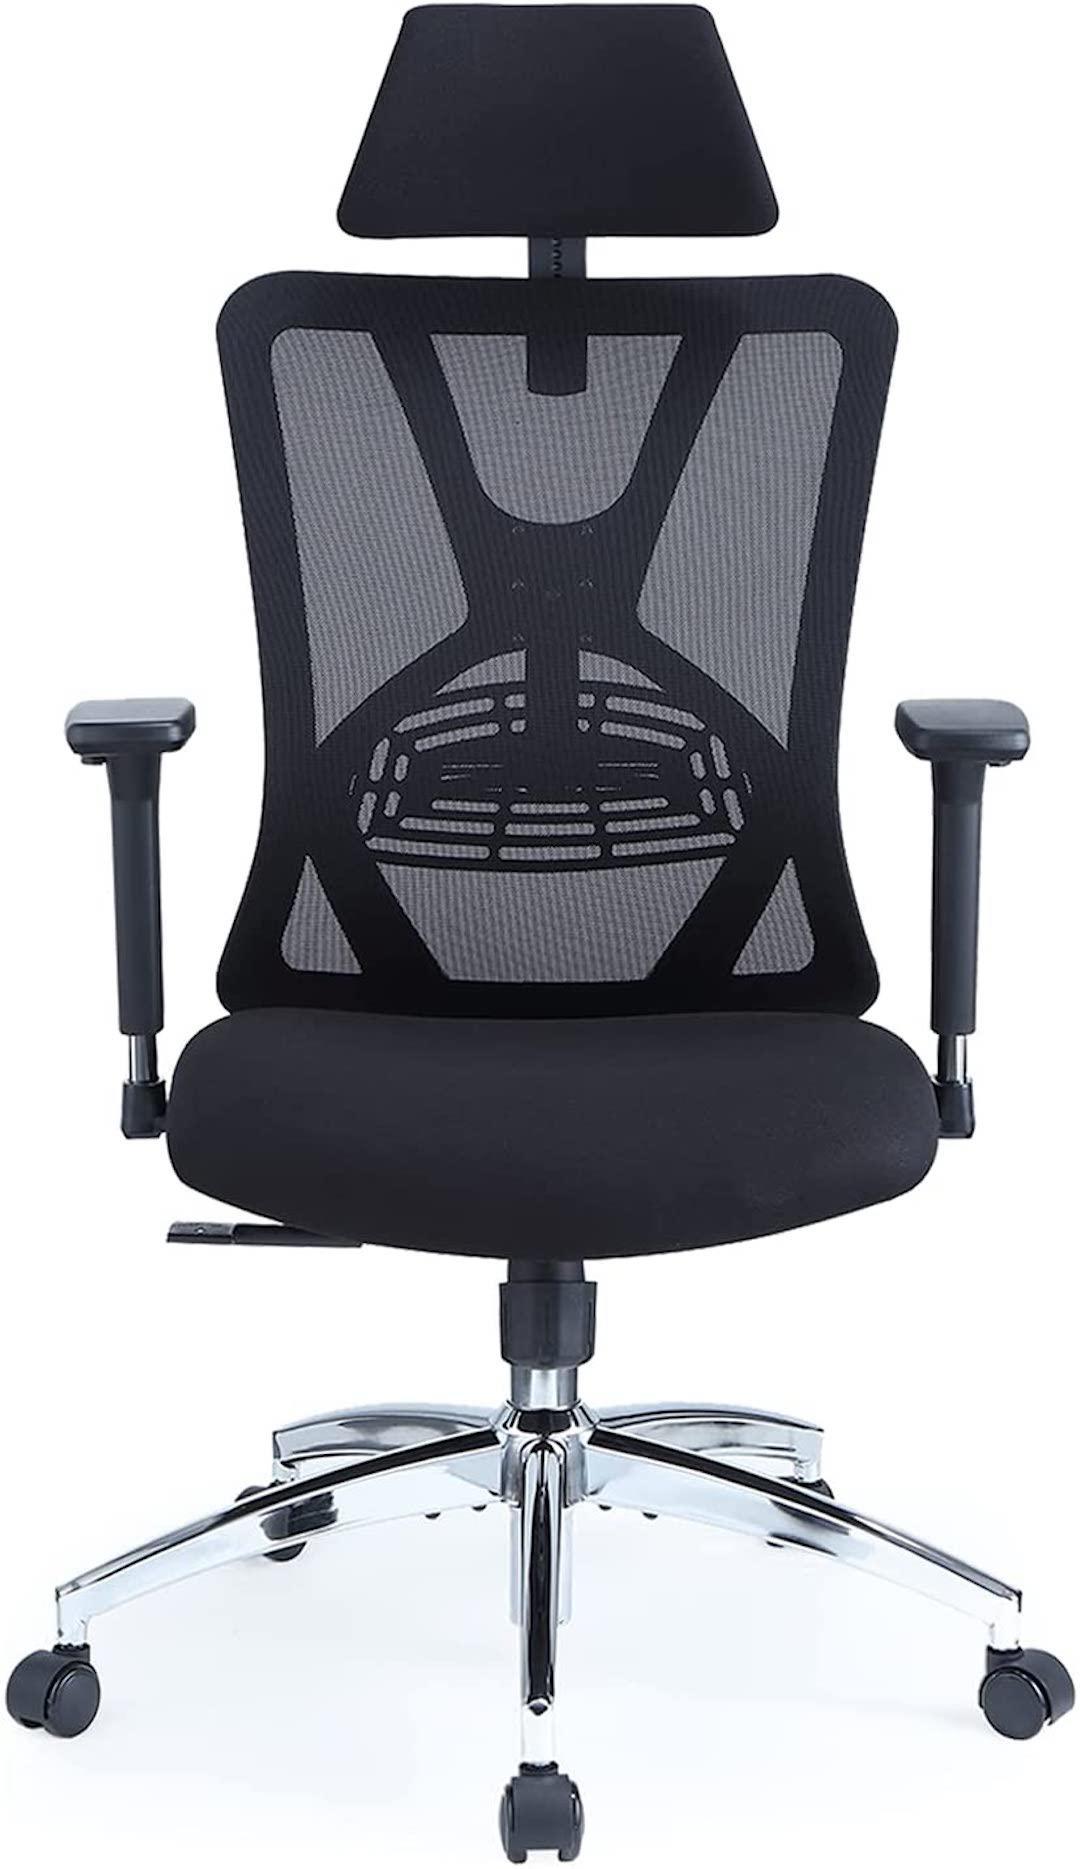 Ticova high-back desk chair